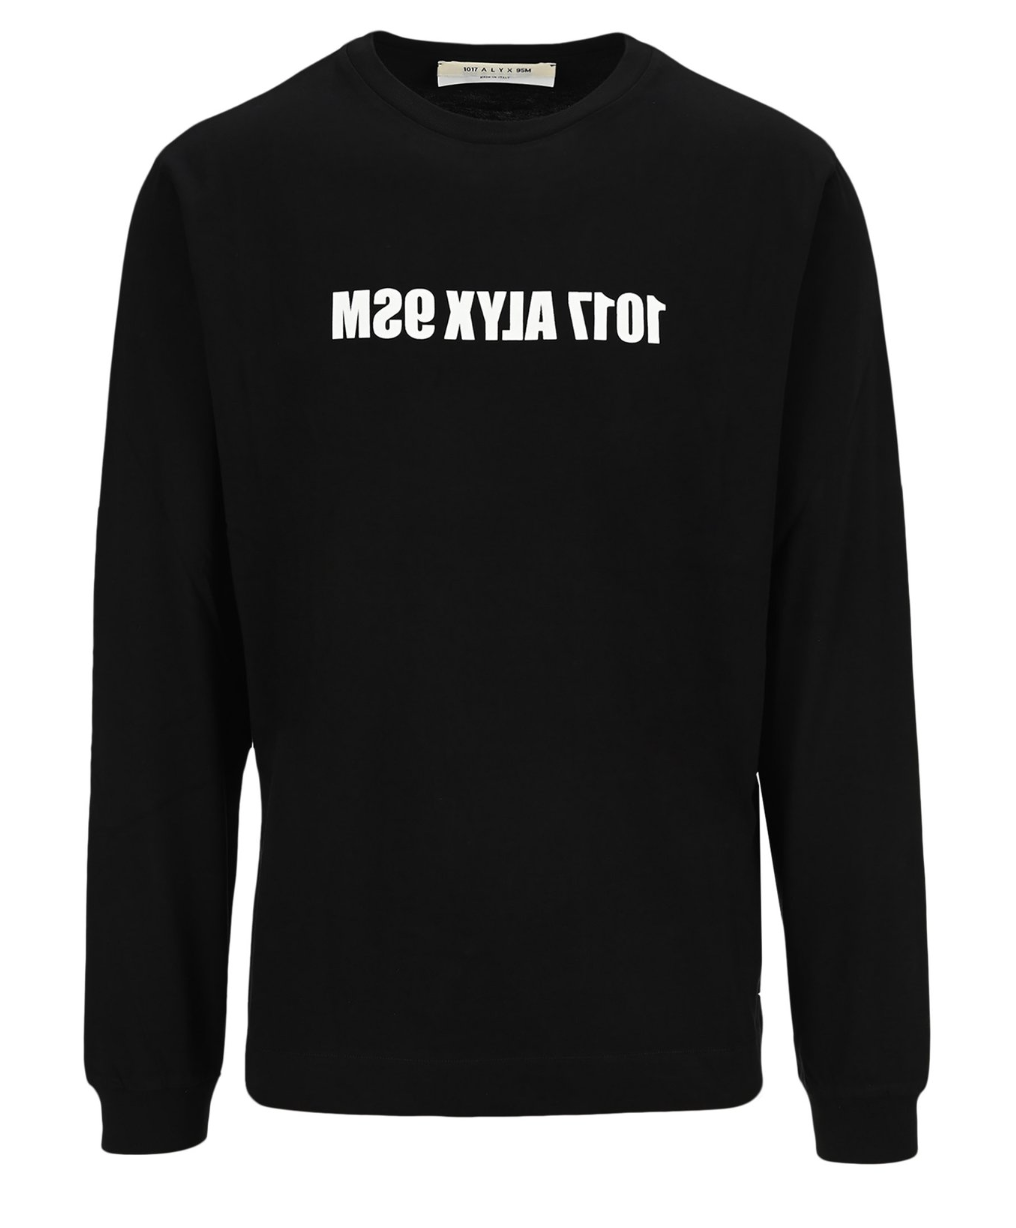 1017 ALYX 9SM Mirrored Logo Long-Sleeve Shirt - Black